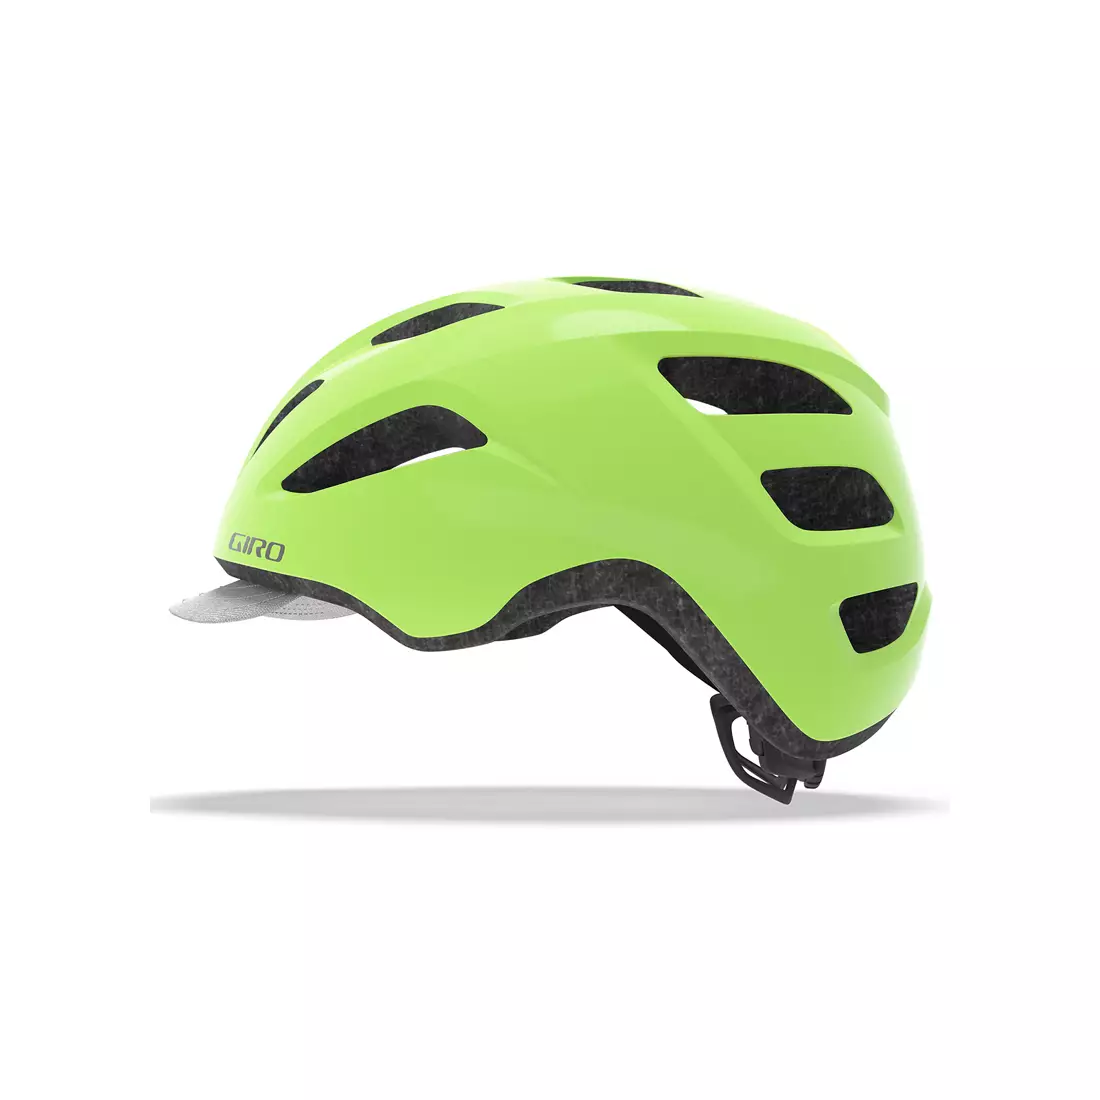 GIRO GR-7100251 urban bicycle helmet TRELLA matte highlight yellow silver